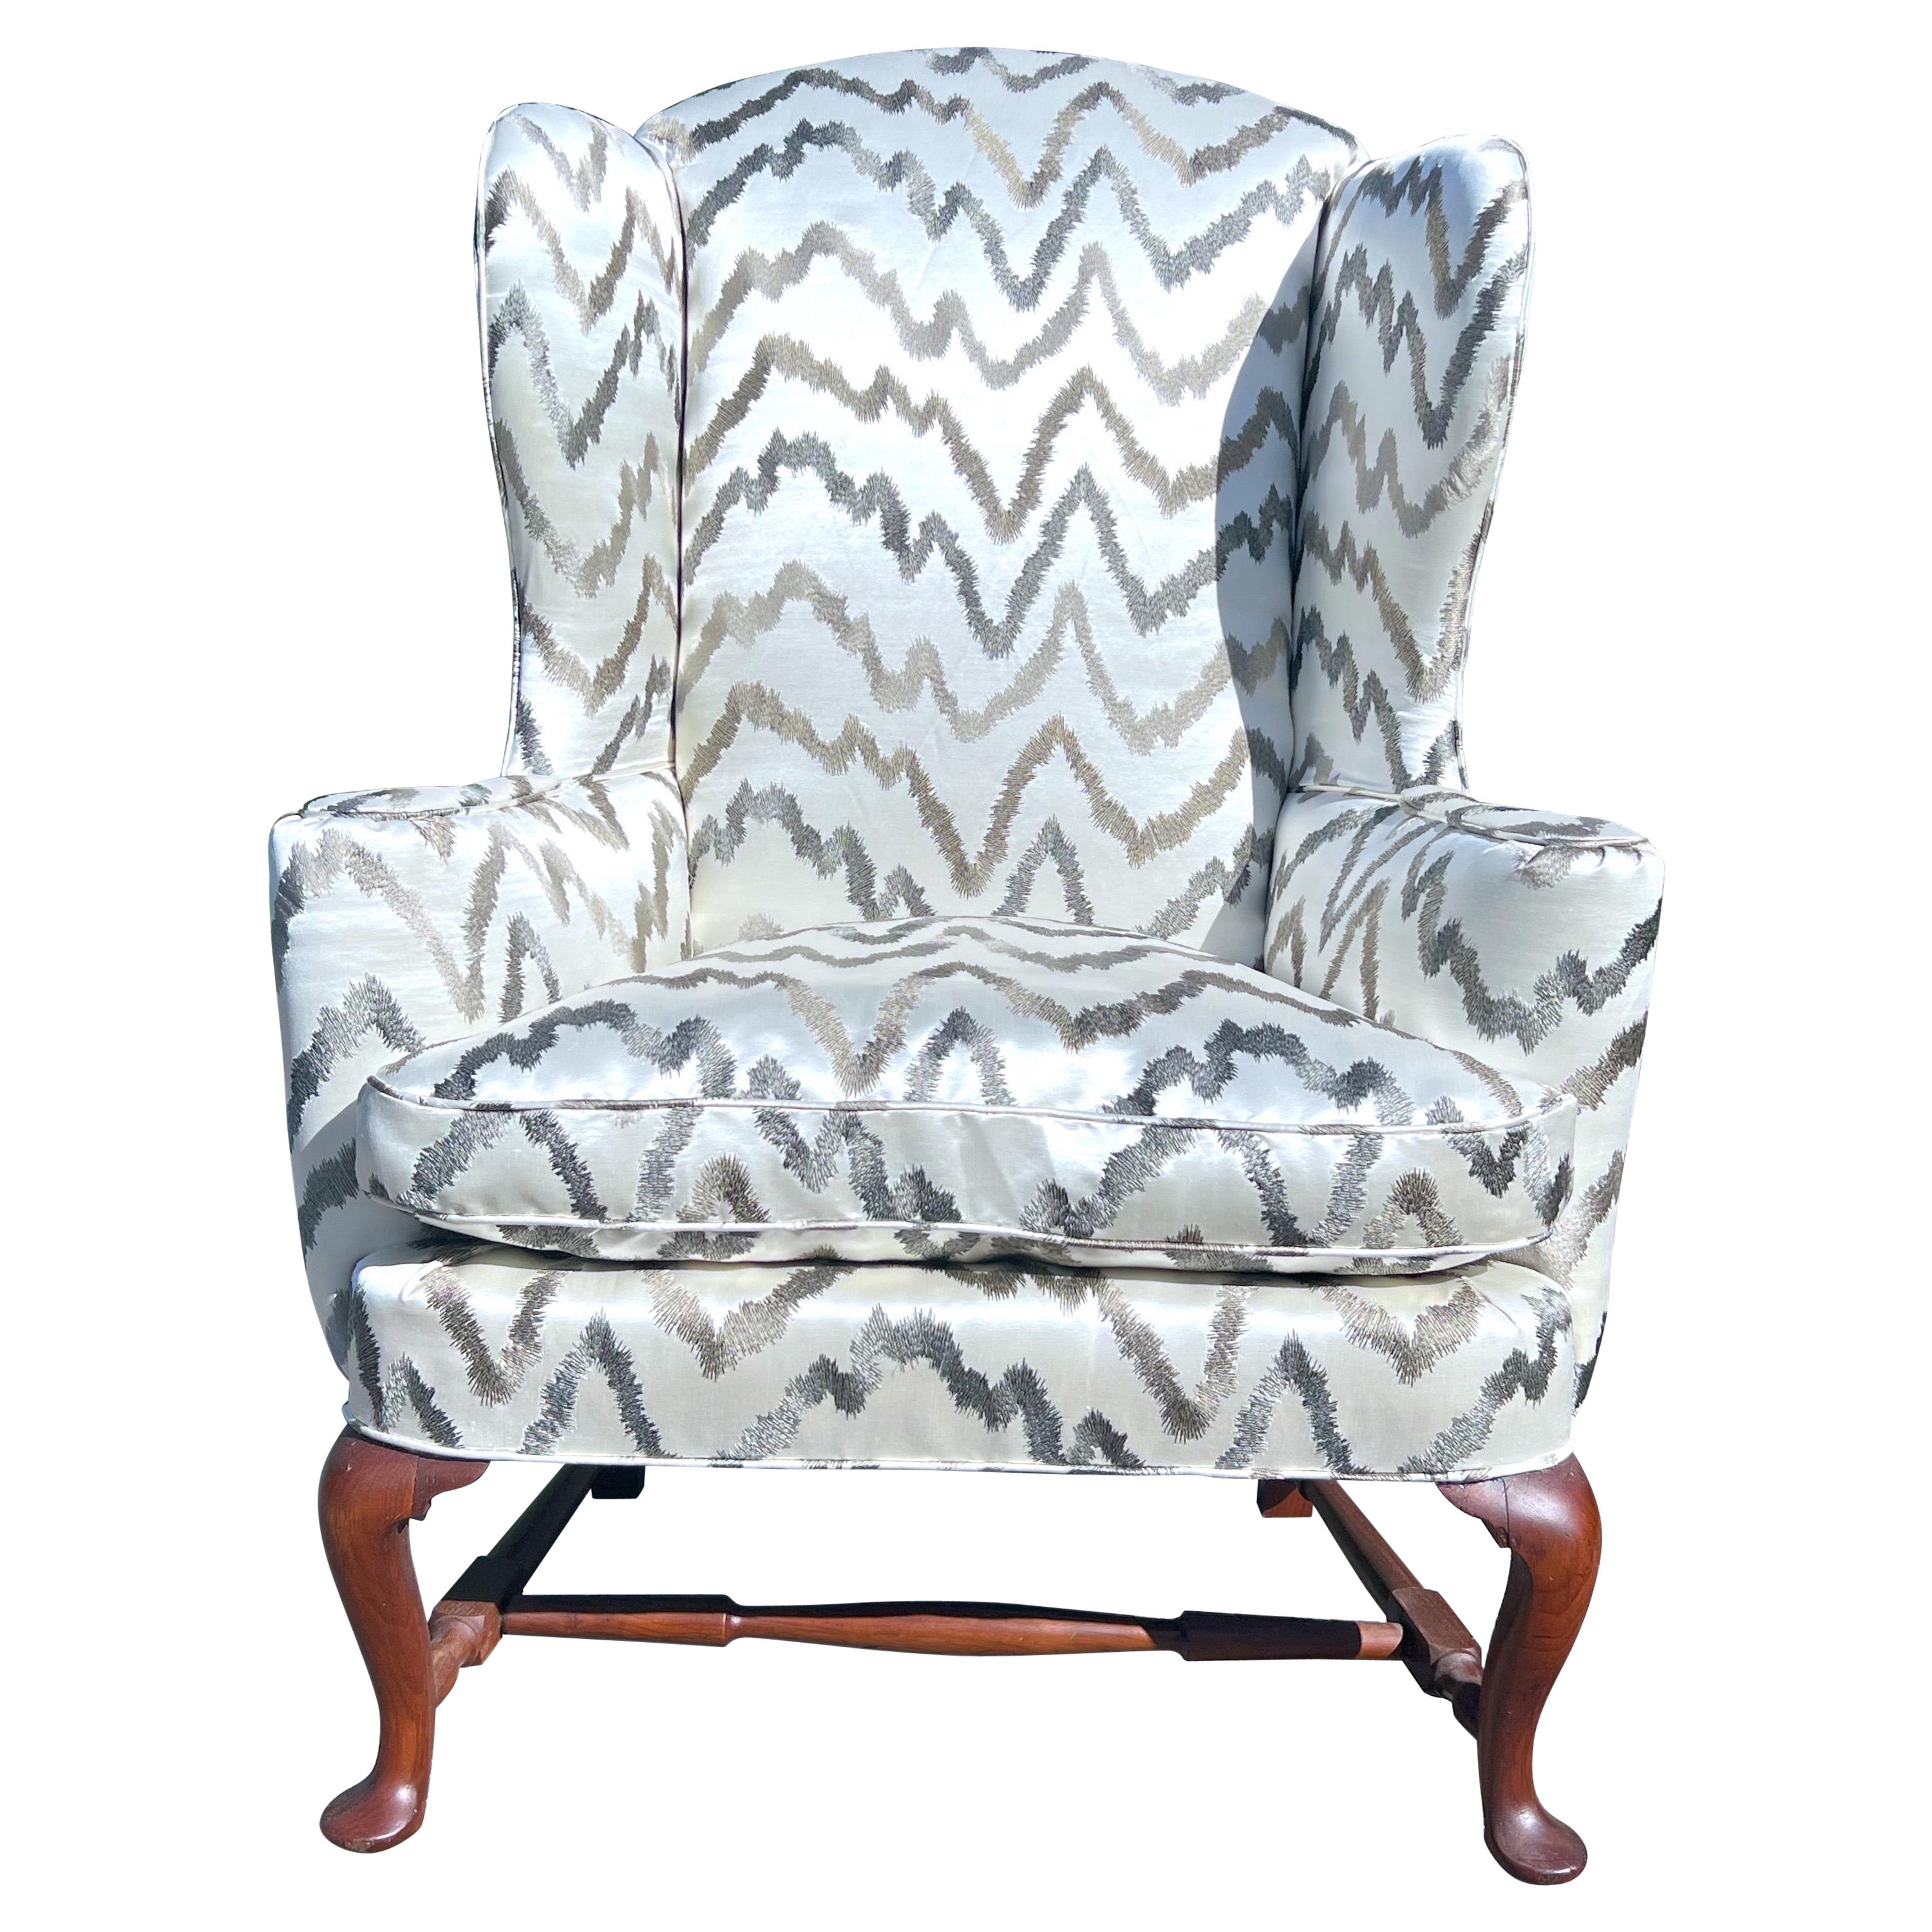 Newly Upholstered 19th Century English Mahogany Wingback Chair